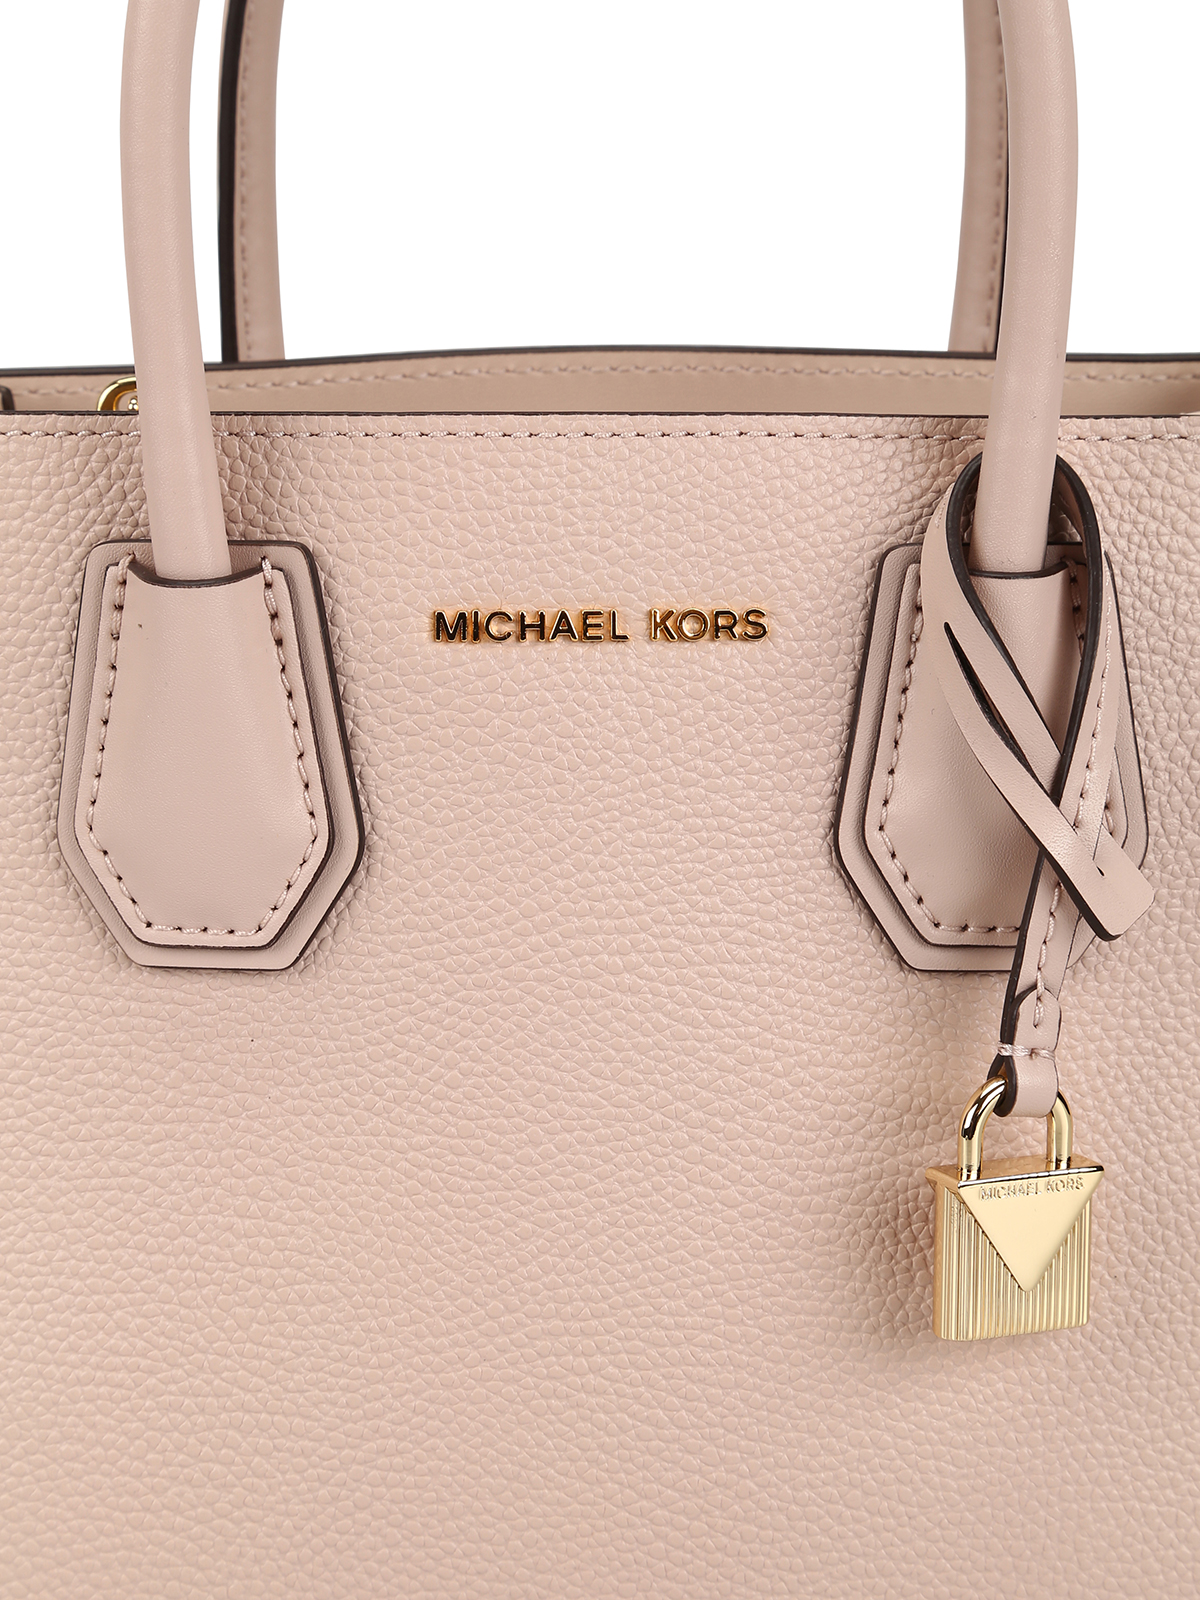 Michael Kors, Bags, Michael Kors Light Pink Purse